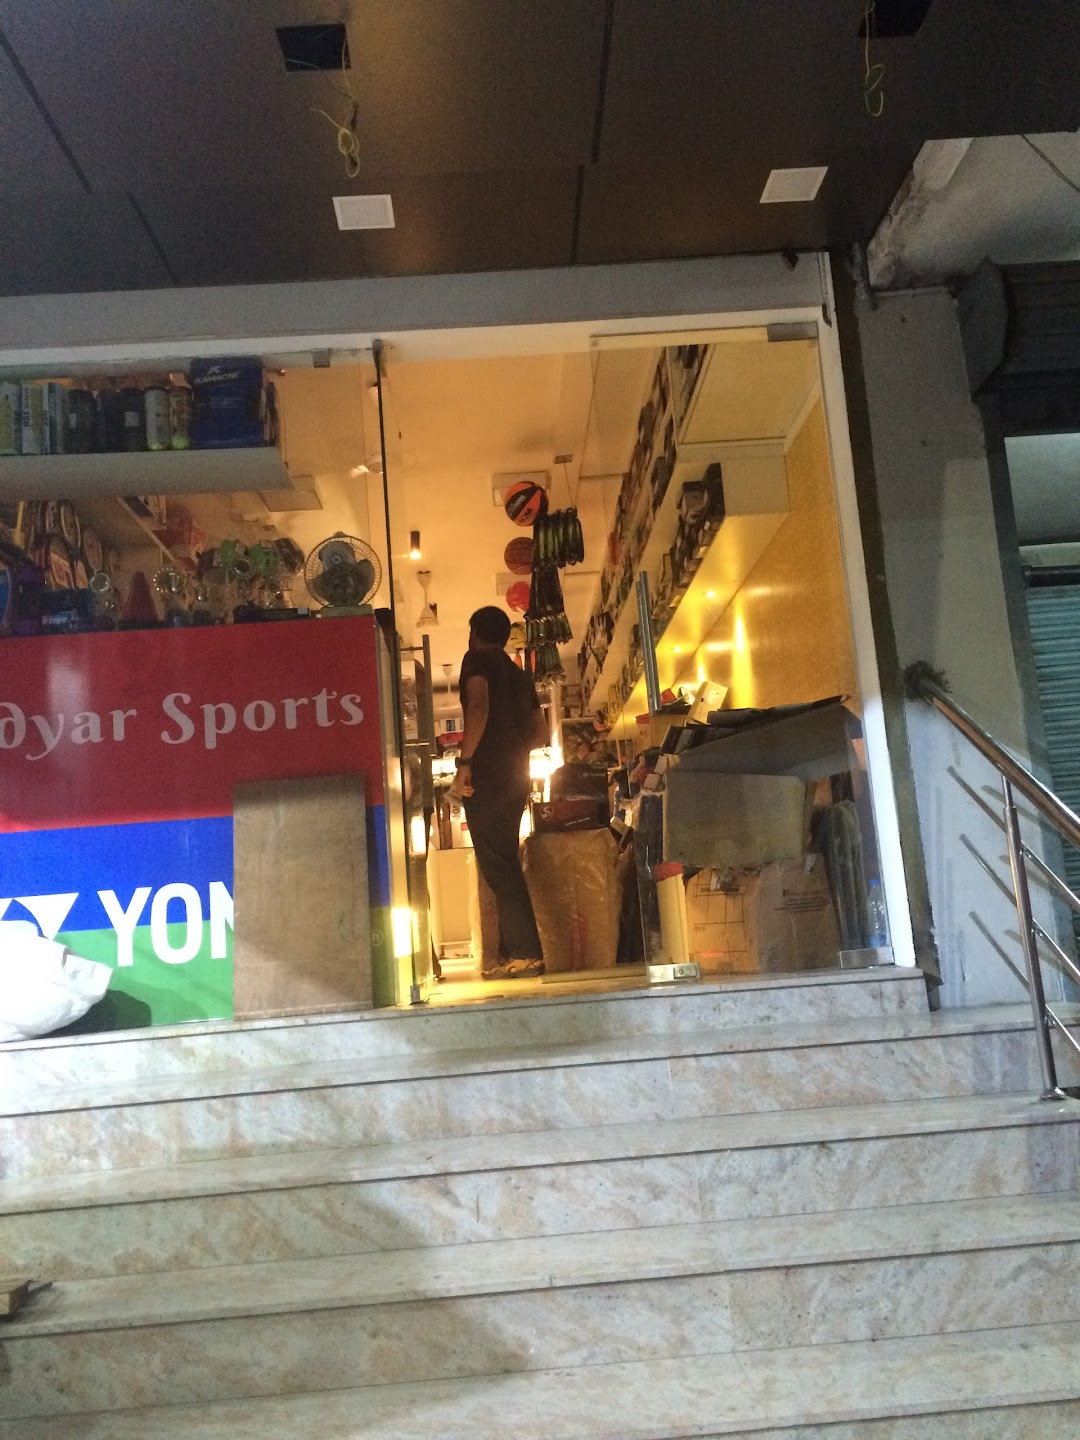 Adyar Sports